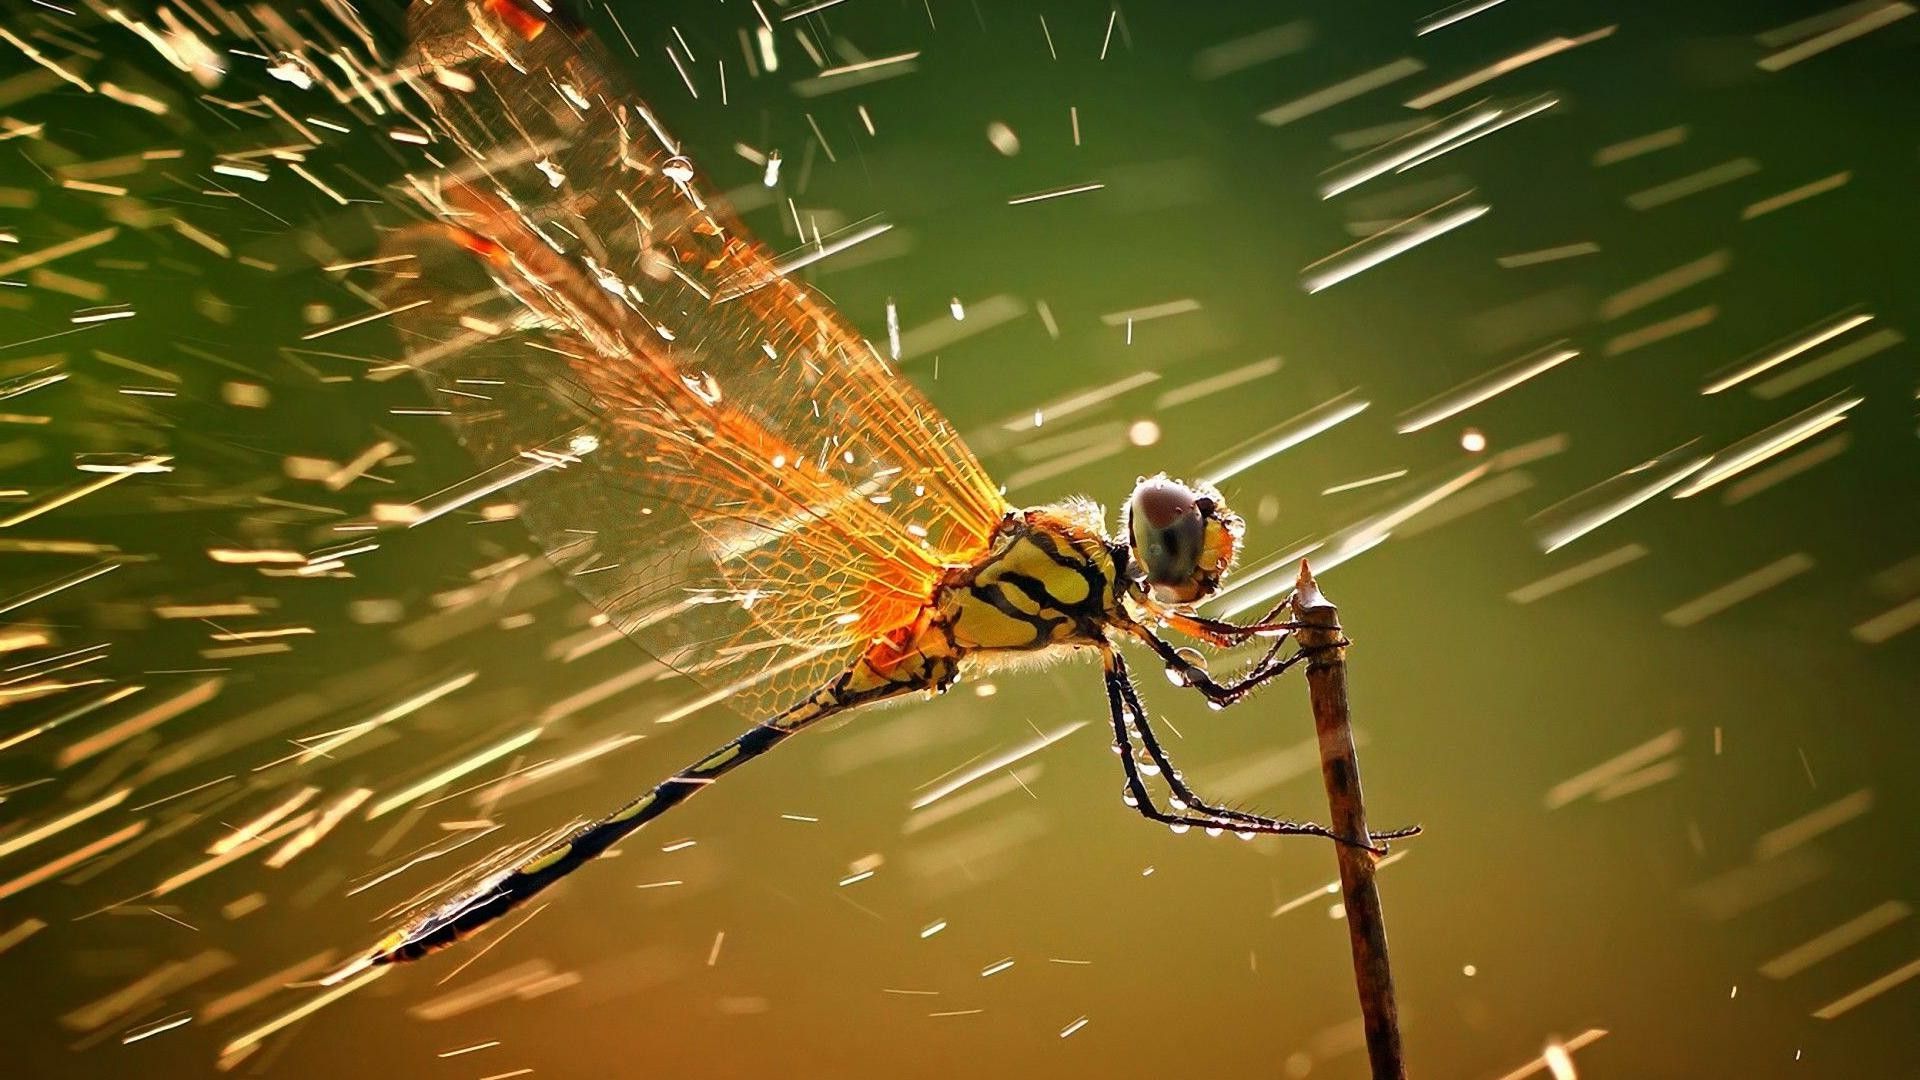 1920x1080 Animals Dragonflies Macro Water Drops Insect Rain Wildlife Wallpaper Hd Desktop And Mobile Background